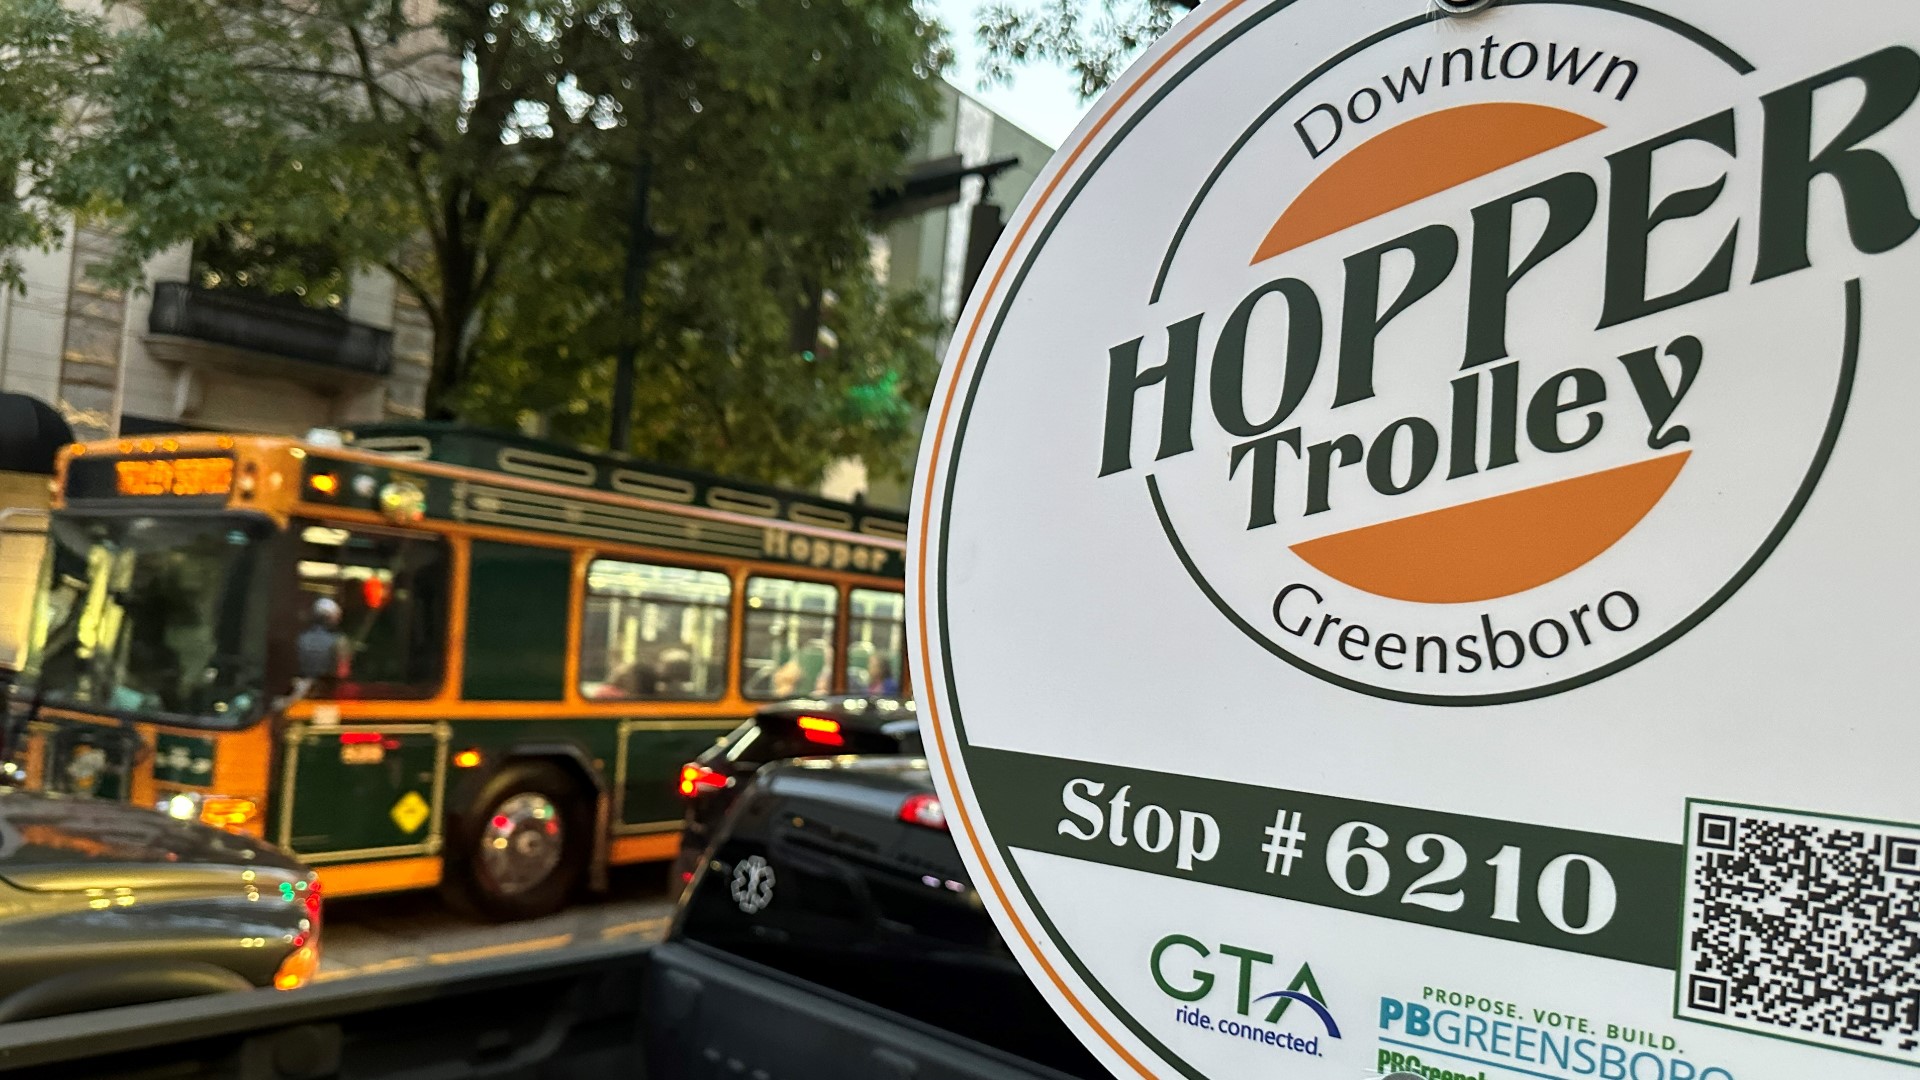 The Hopper Trolley runs throughout downtown Greensboro Thursday through Sunday.